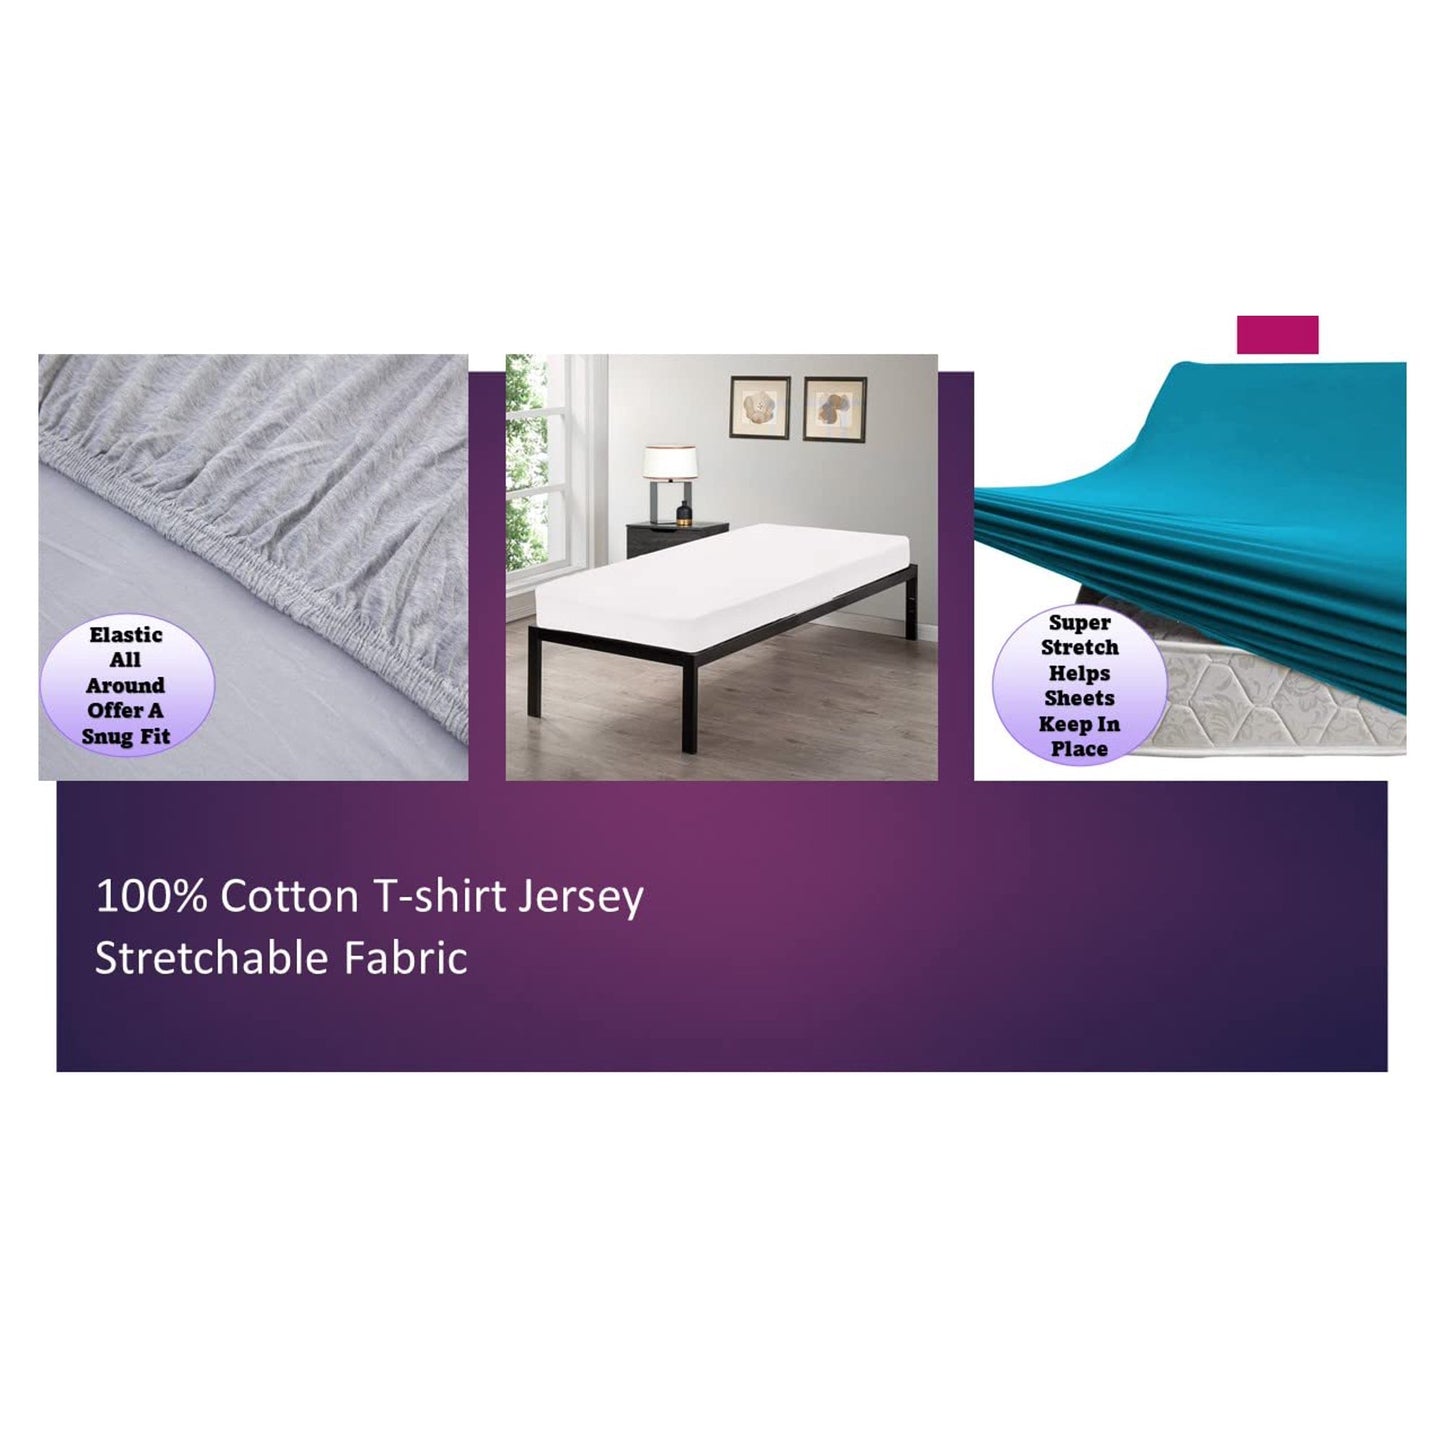 100% Combed T-Shirt Cotton Jersey Knit Camp Sheet Set, 1 Fitted cot Sheet, 1 Flat Sheet, 1 Standard Pillow case Twin Size 39"X75", Light Pink